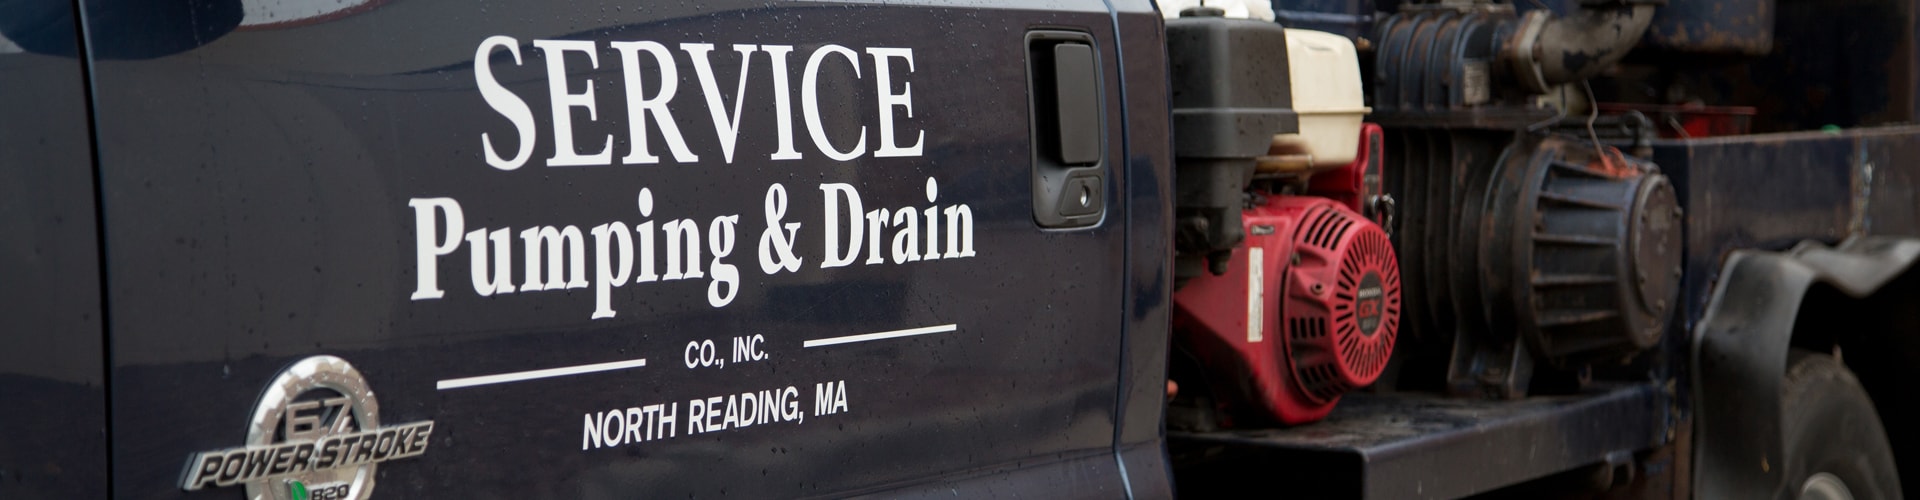 Service Pumping & Drain Co., Inc.